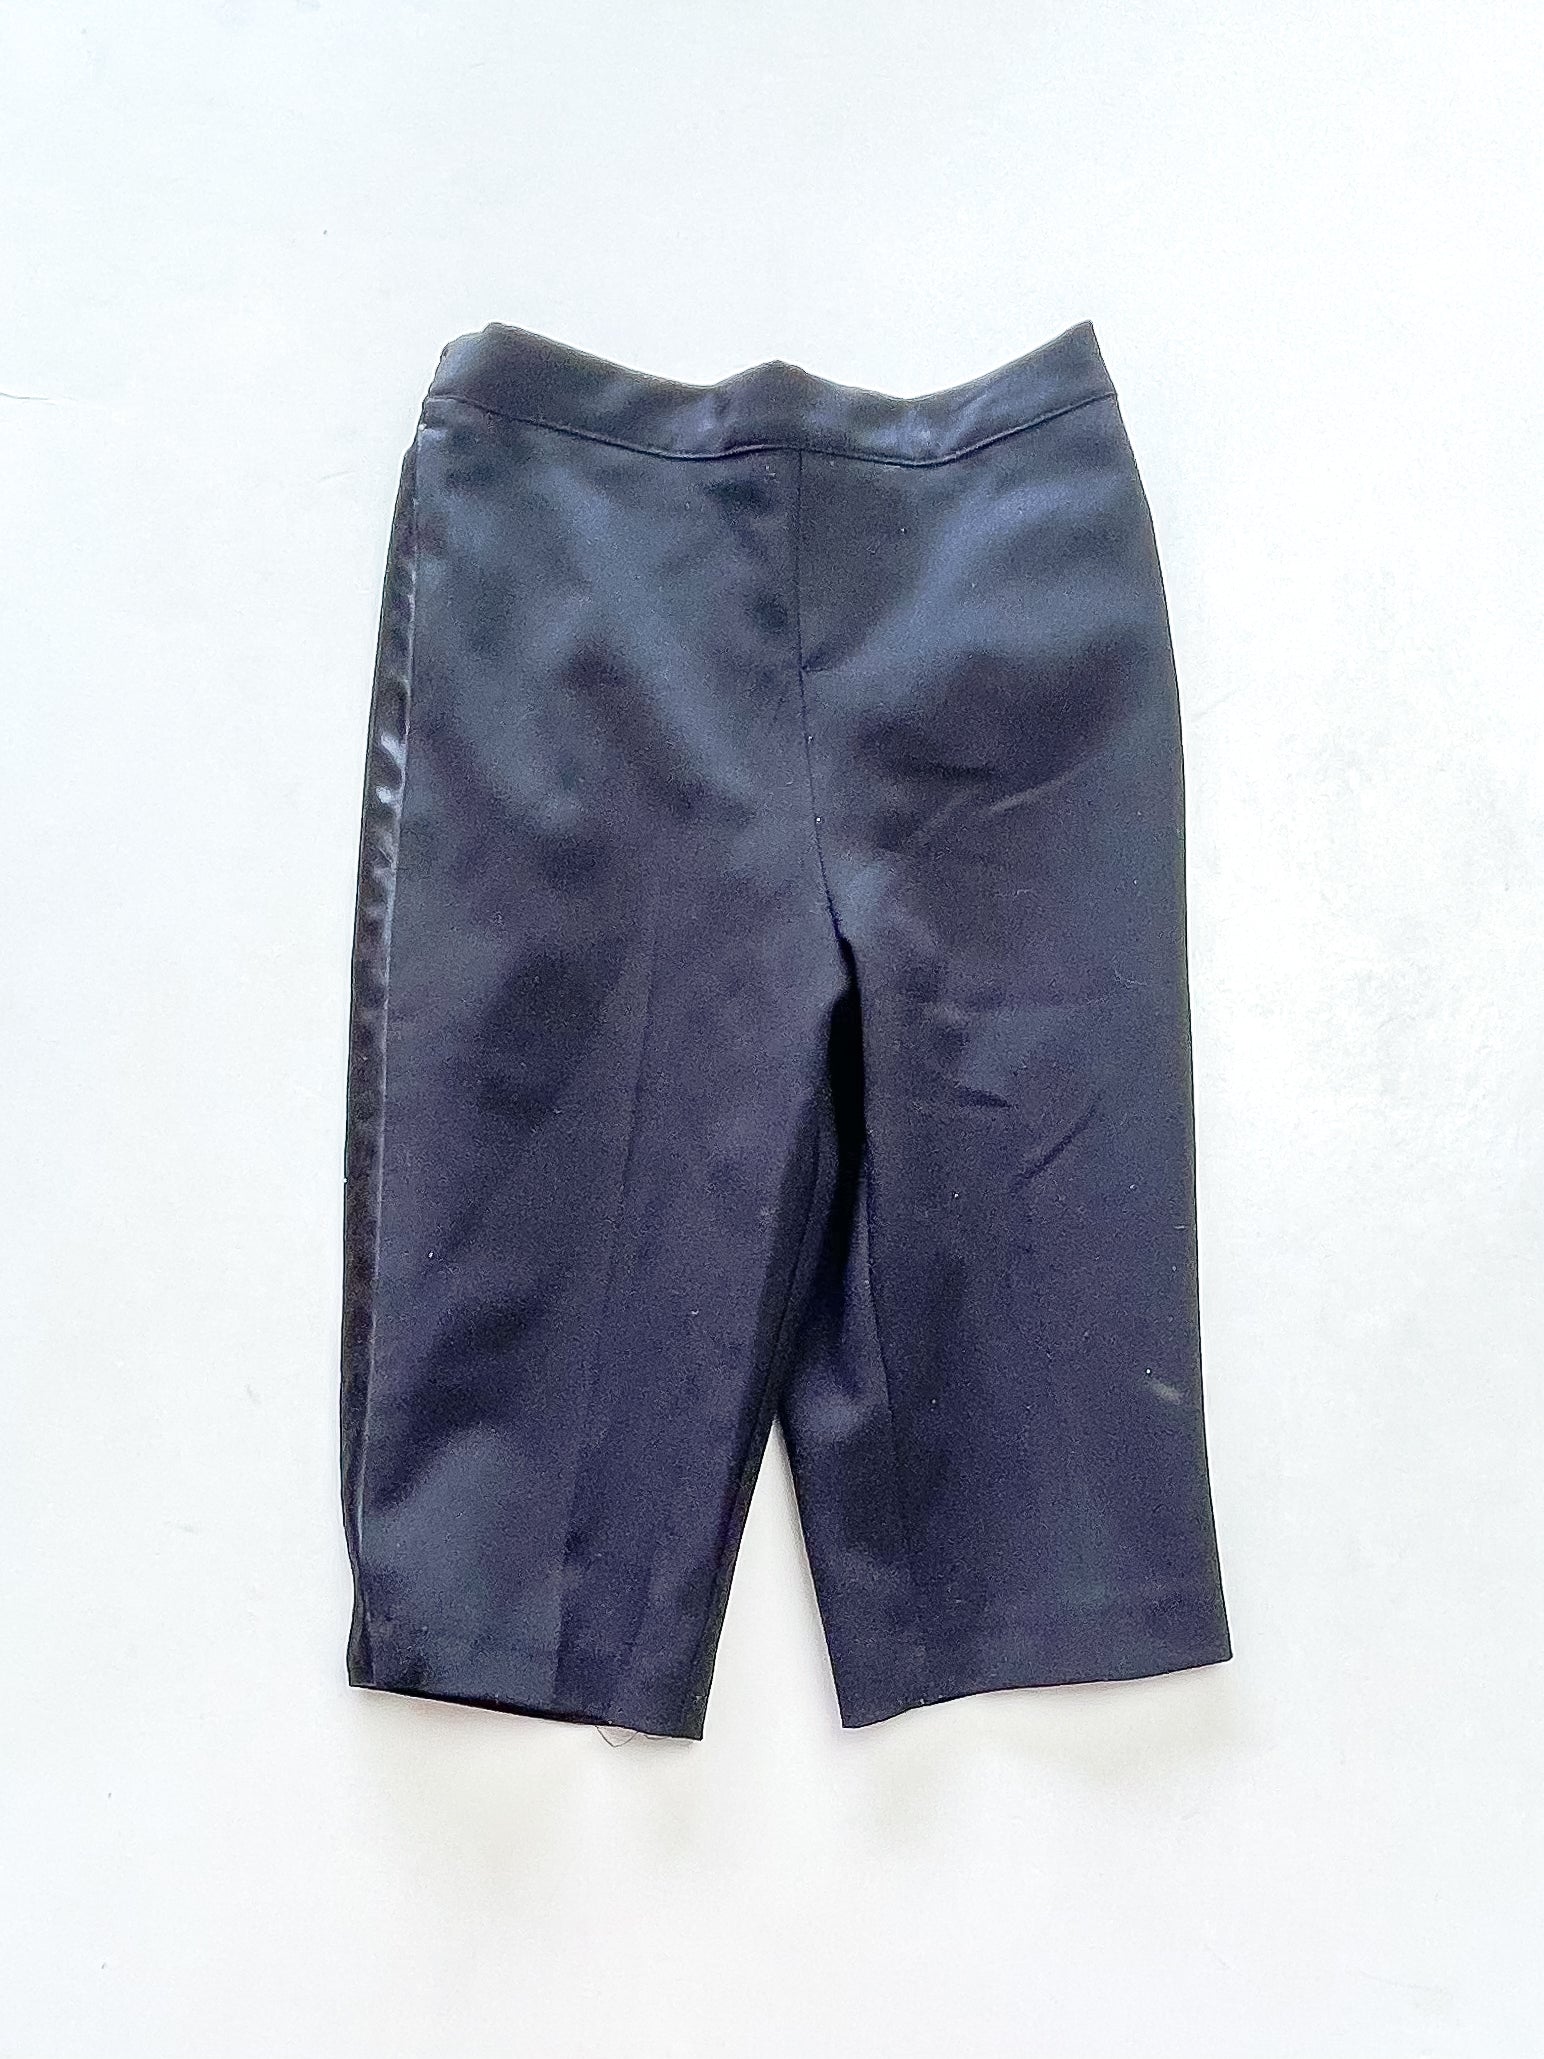 Teeny Weeny suit dress pants (6-9m)